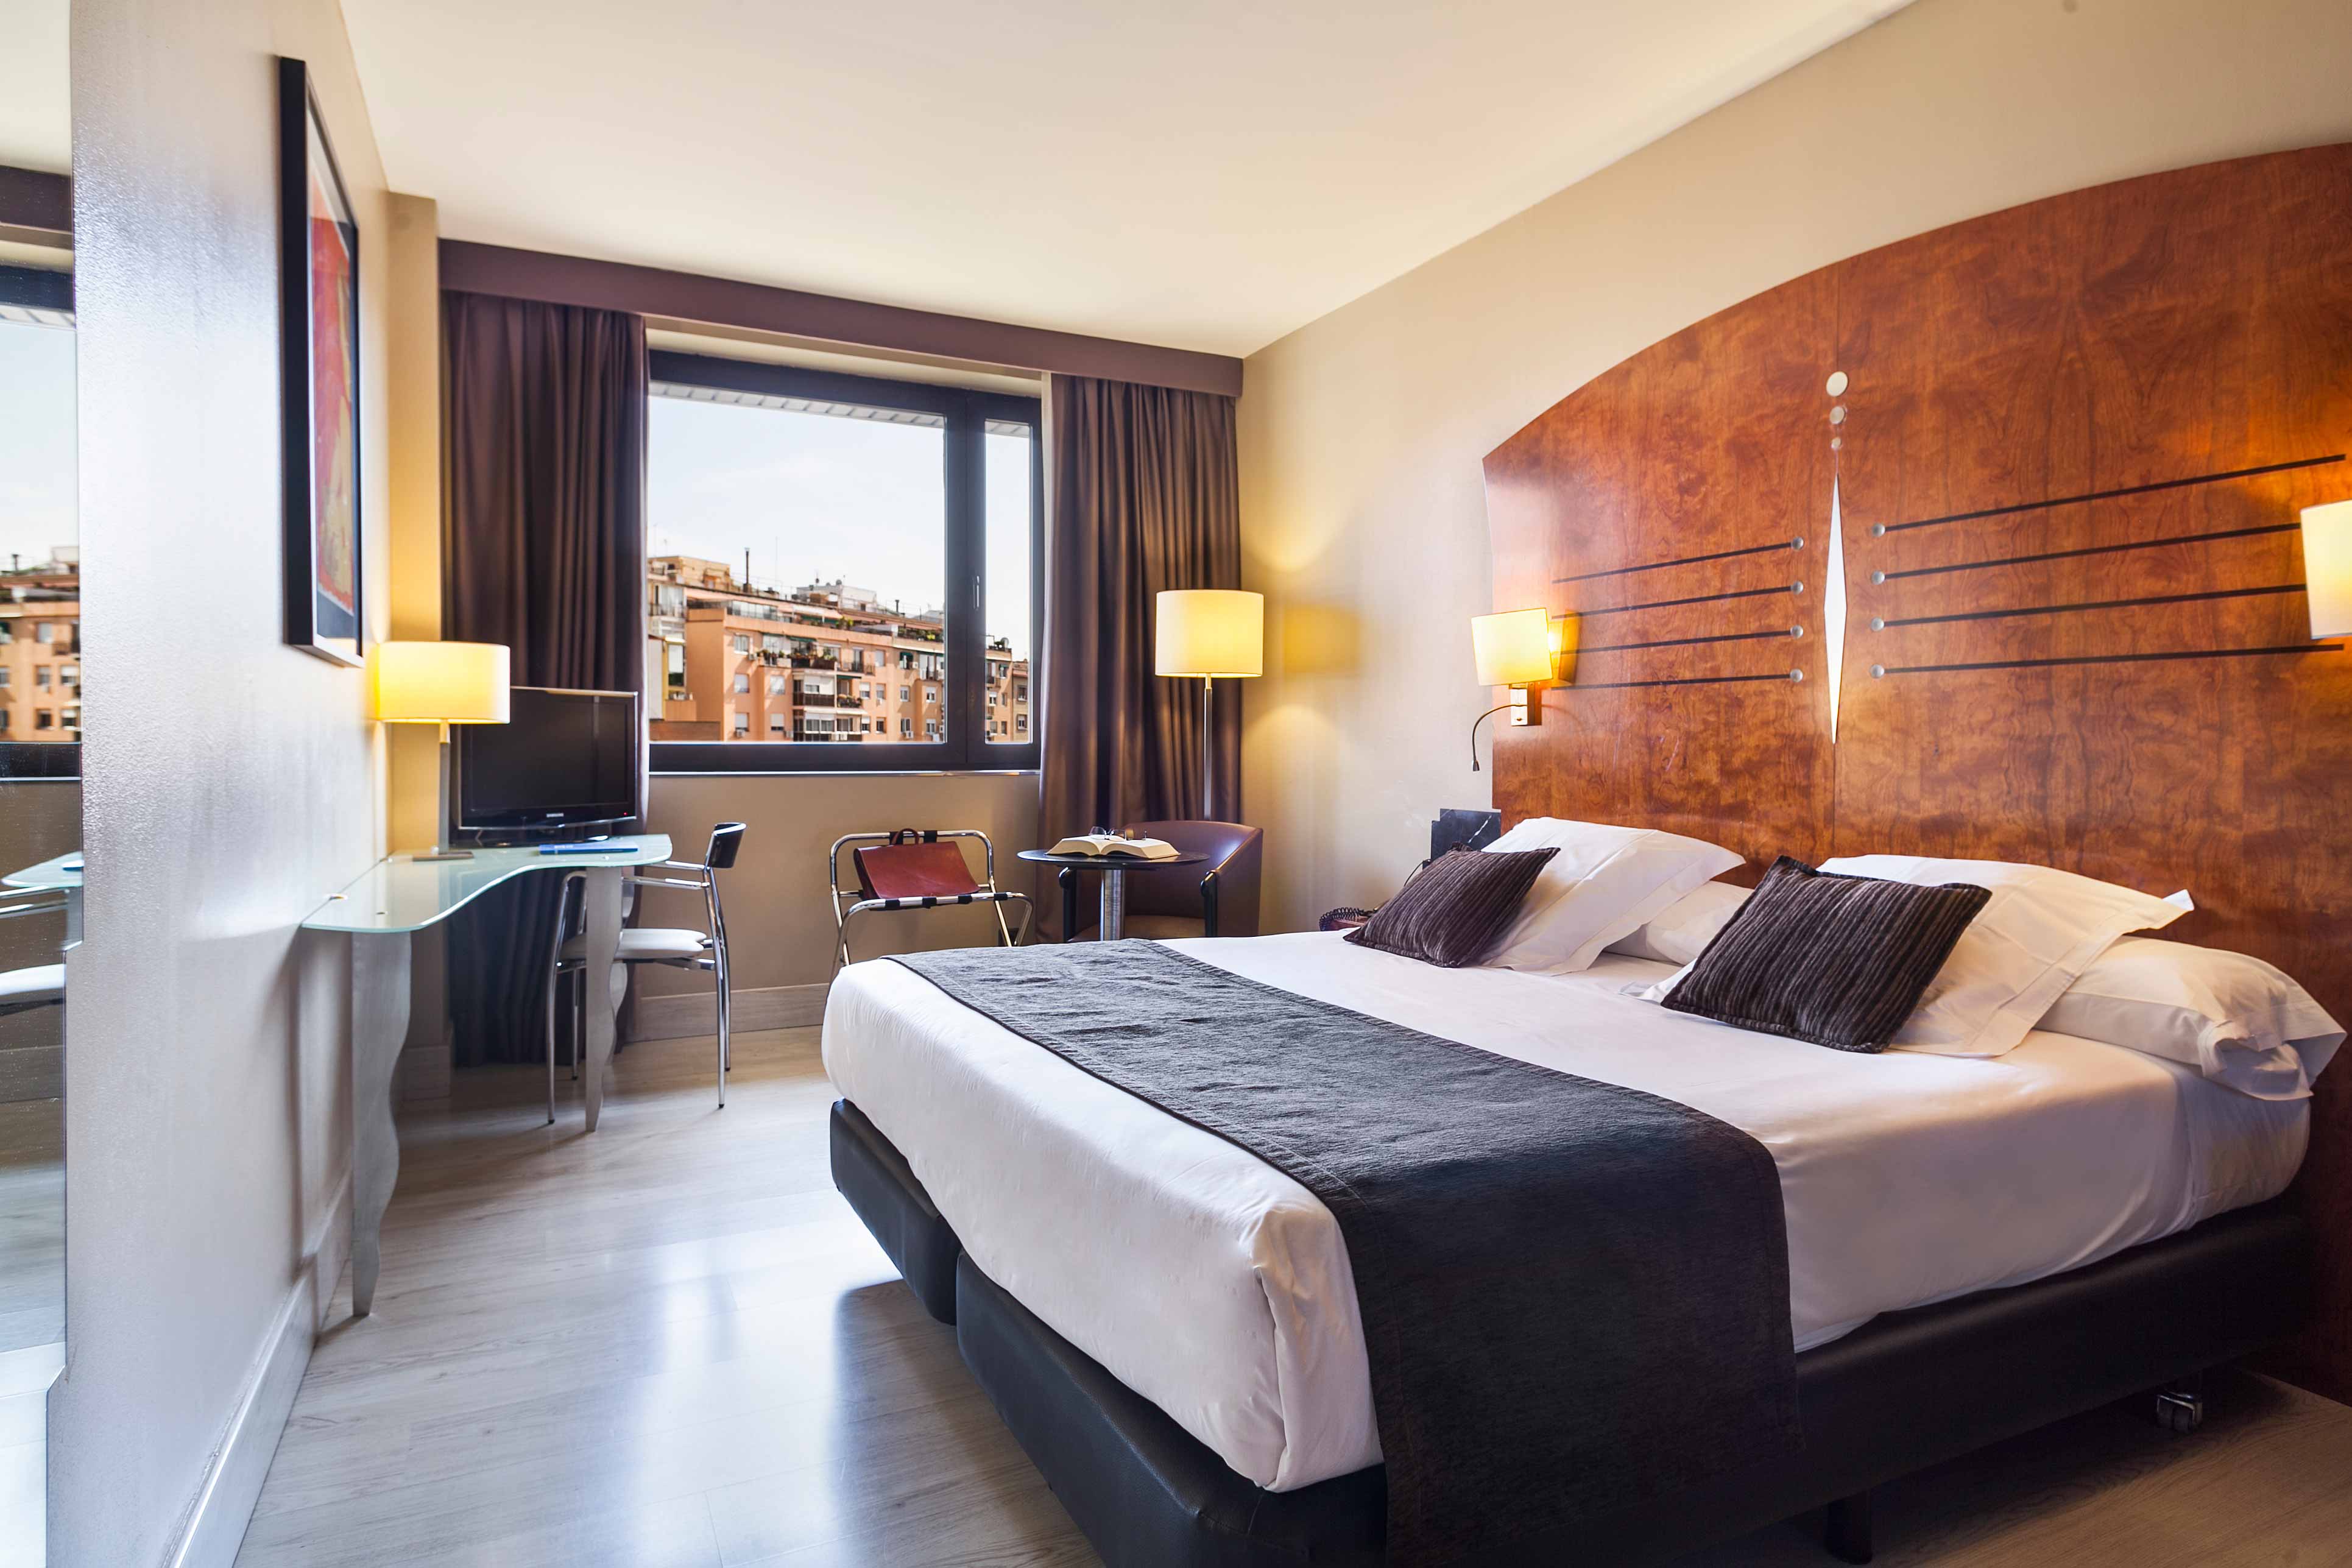 Coahuila’s hotel industry lacks personnel